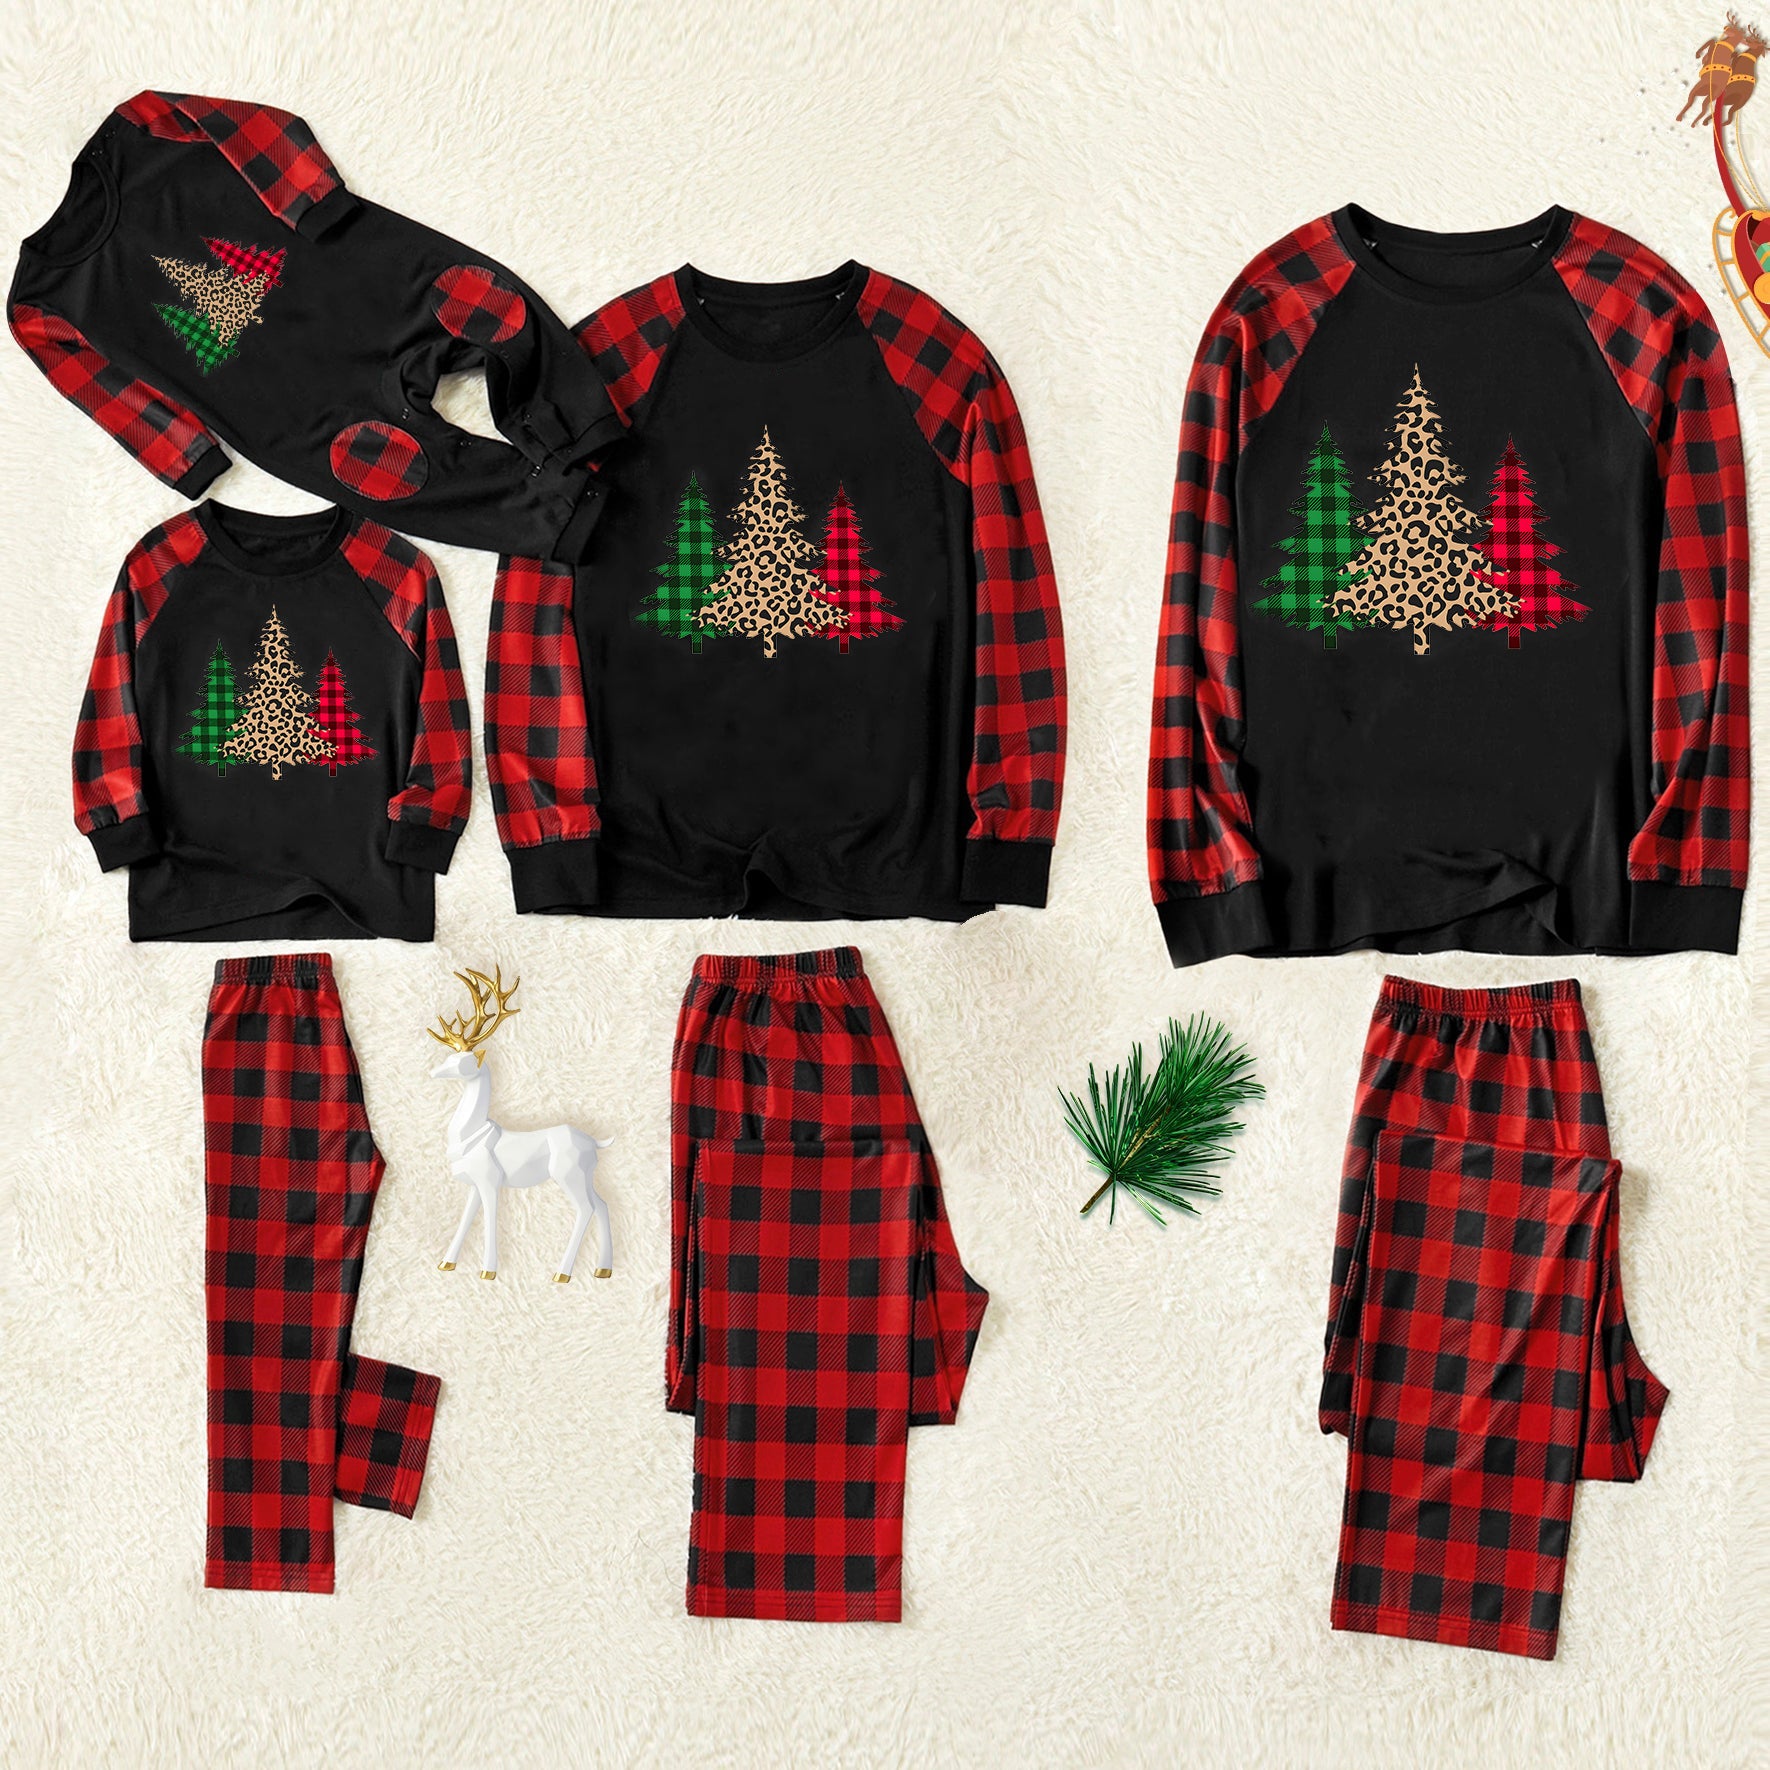 Family Christmas Shirts Buffalo Plaid Christmas Tree Patterned Contrast Black top and Black & Red Plaid Pants Family Matching Pajamas Set